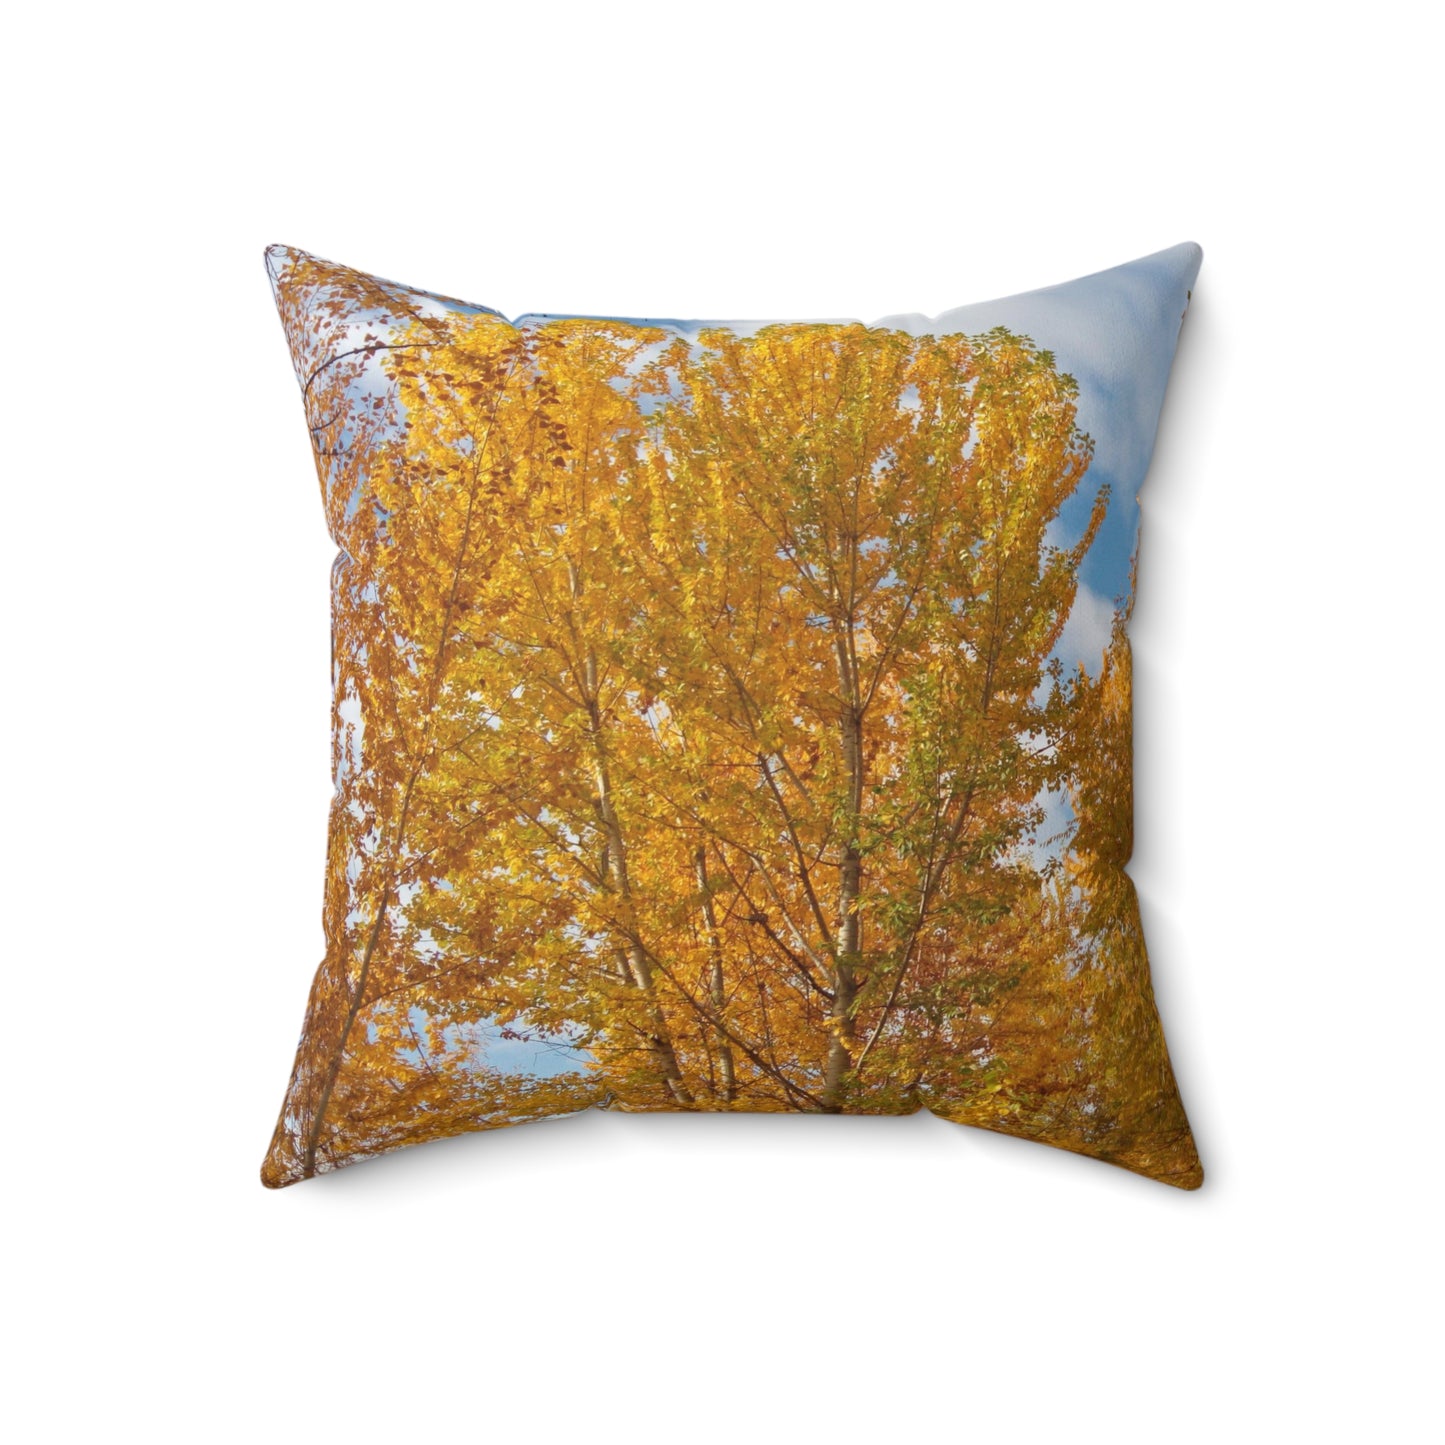 Autumn Gold Spun Polyester Square Pillow